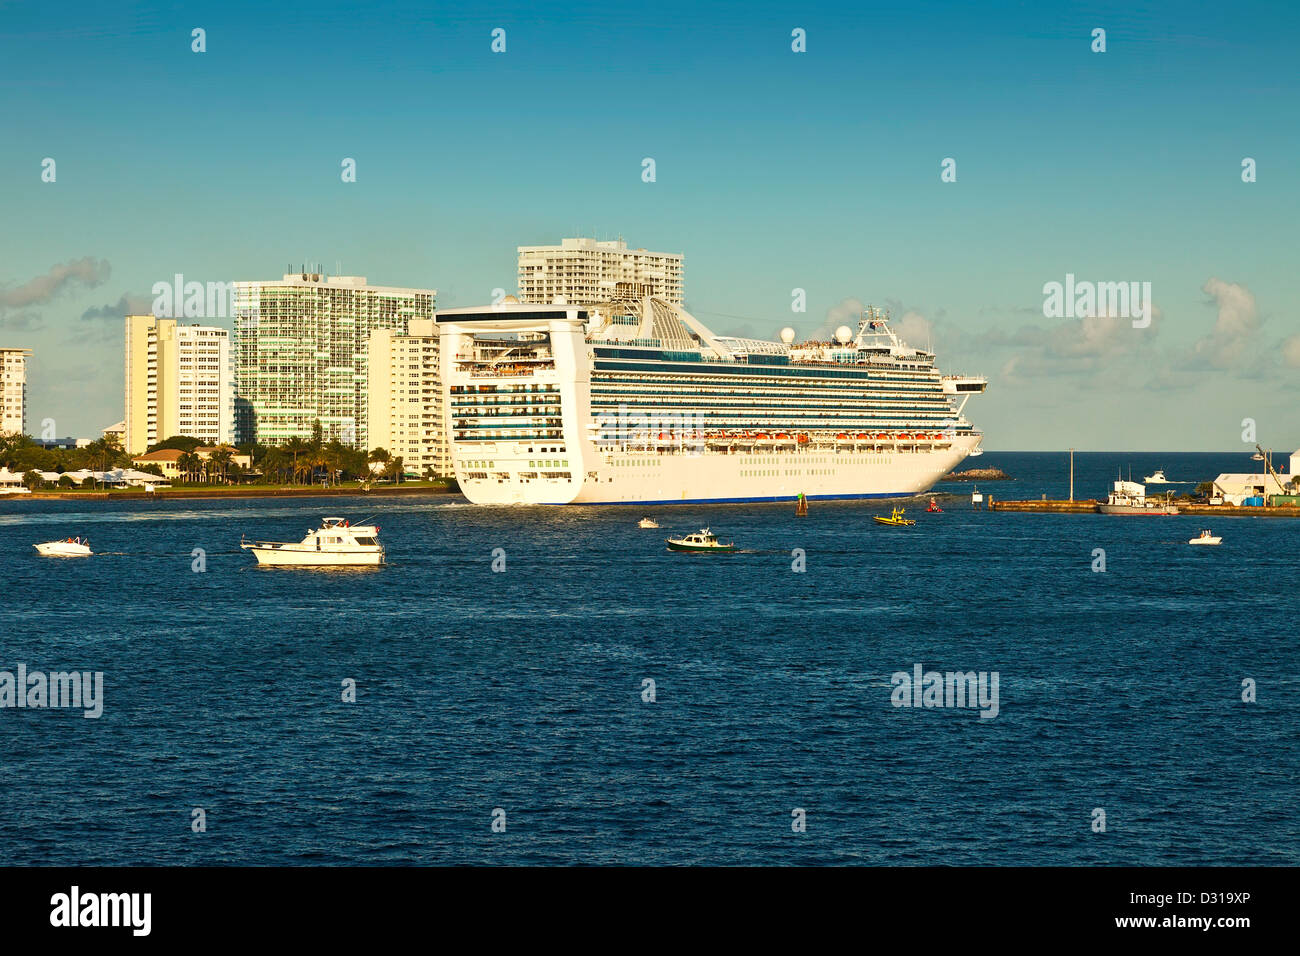 Cruise ship entering leaving Ft. Lauderdale and entering Atlantic Ocean Stock Photo